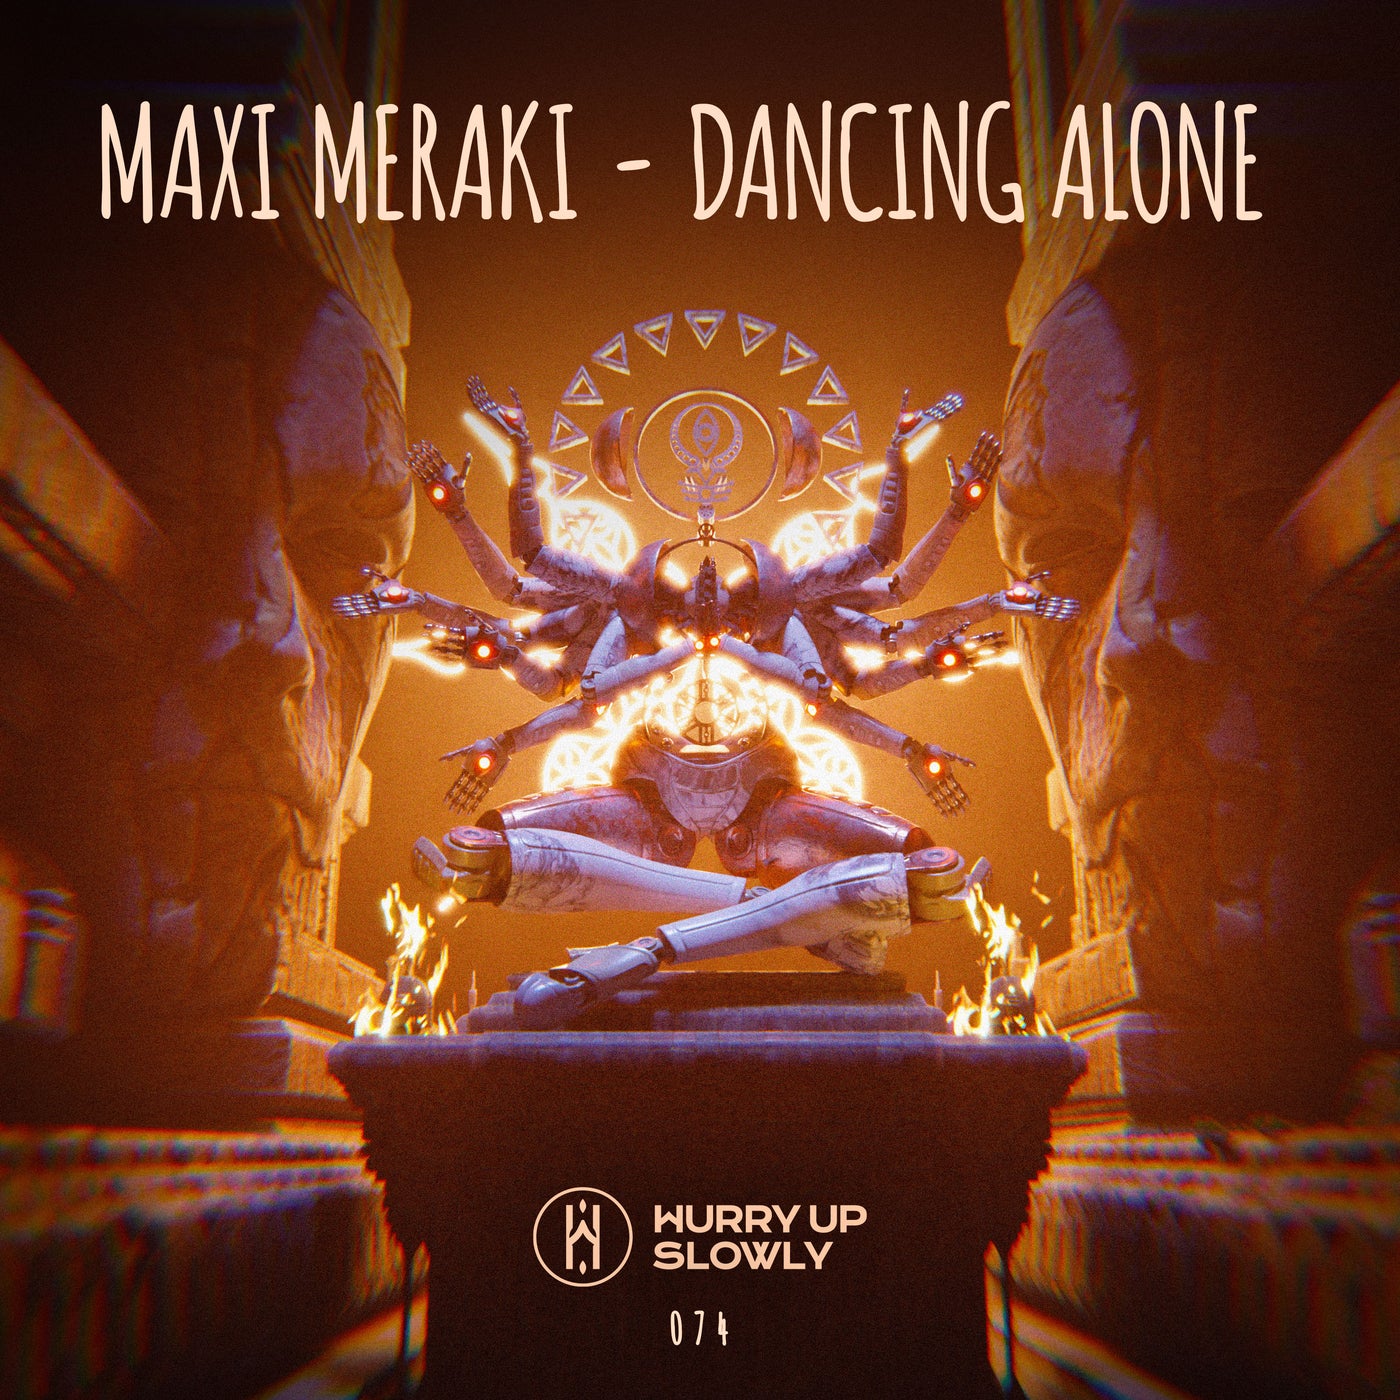 Maxi Meraki - Dancing Alone on Hurry Up Slowly